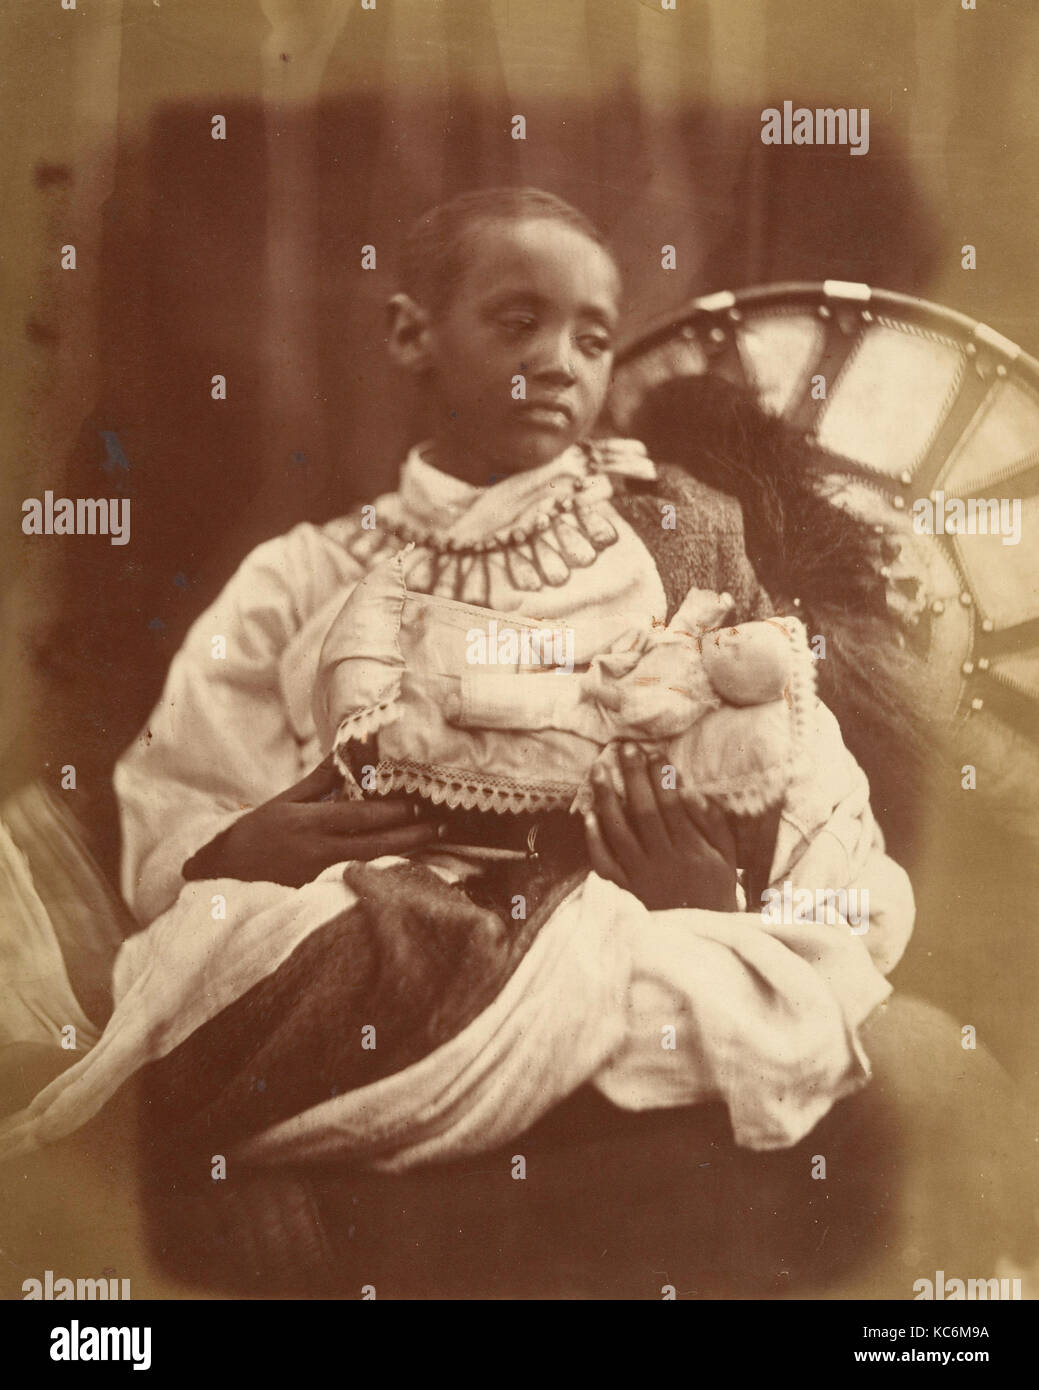 Déjatch Alámayou, König Theodore's Sohn, Julia Margaret Cameron, Juli 1868 Stockfoto